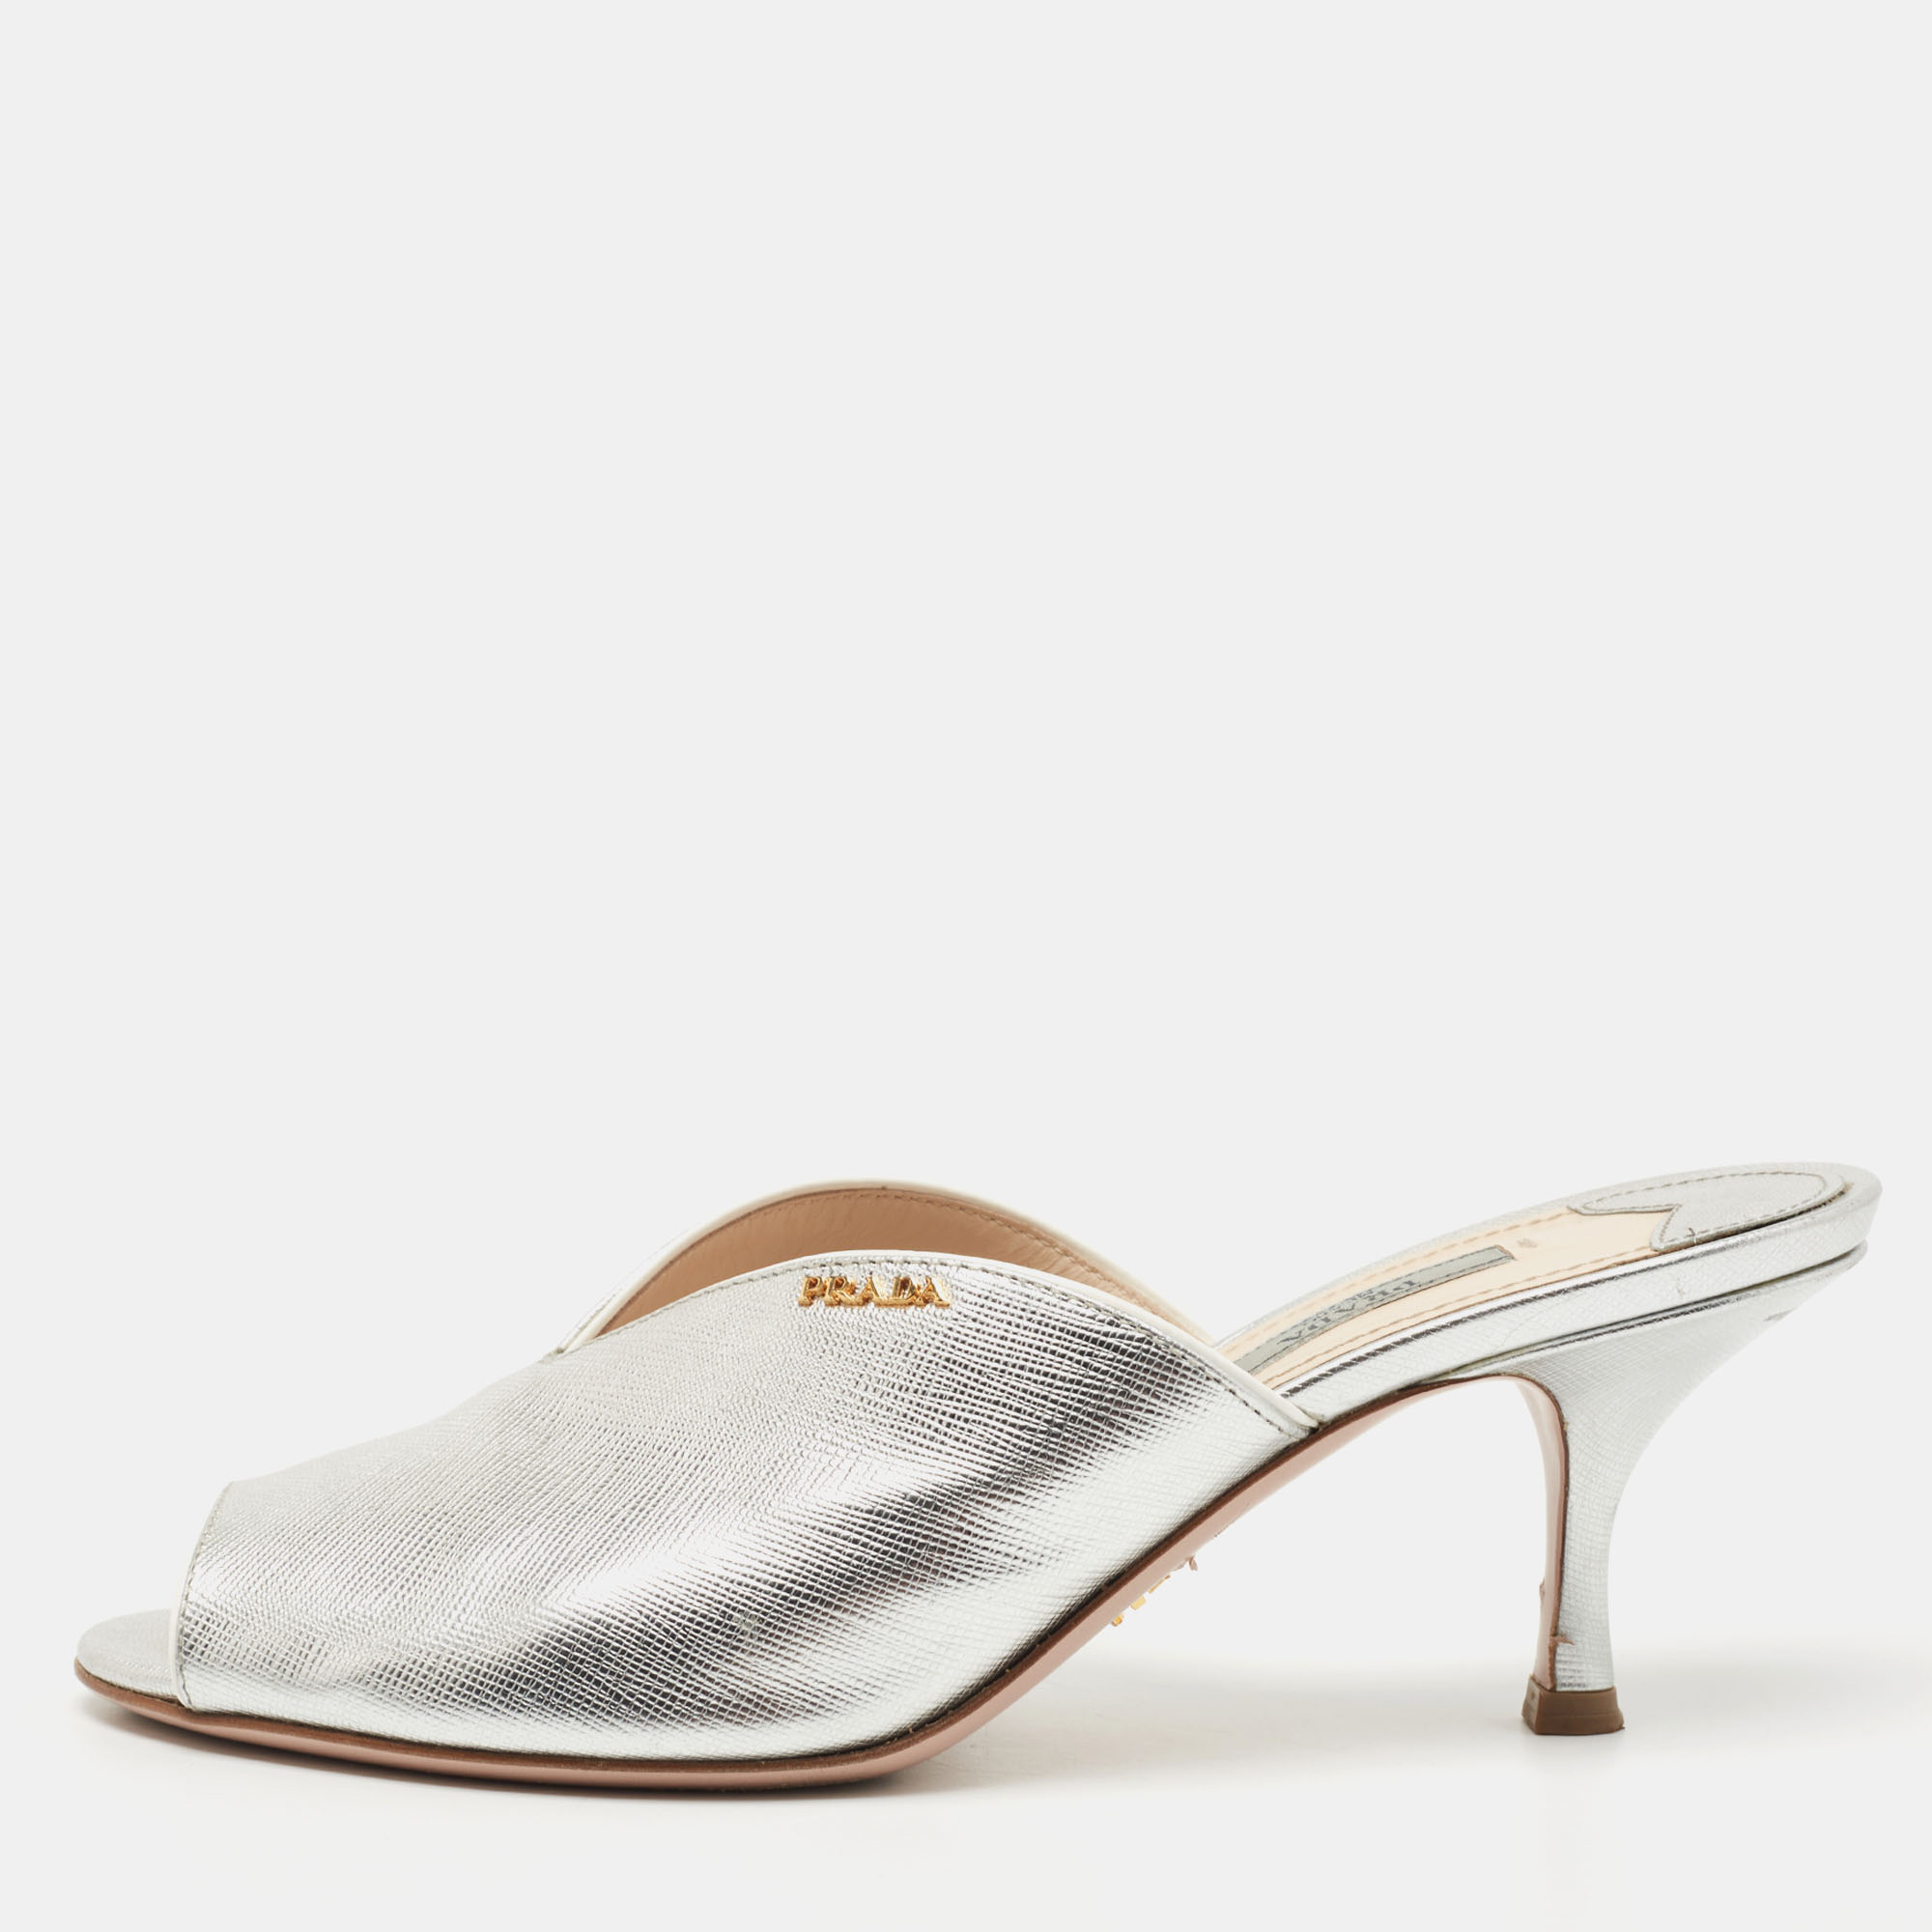 Pre-owned Prada Silver Saffiano Leather Peep Toe Mules Size 38.5